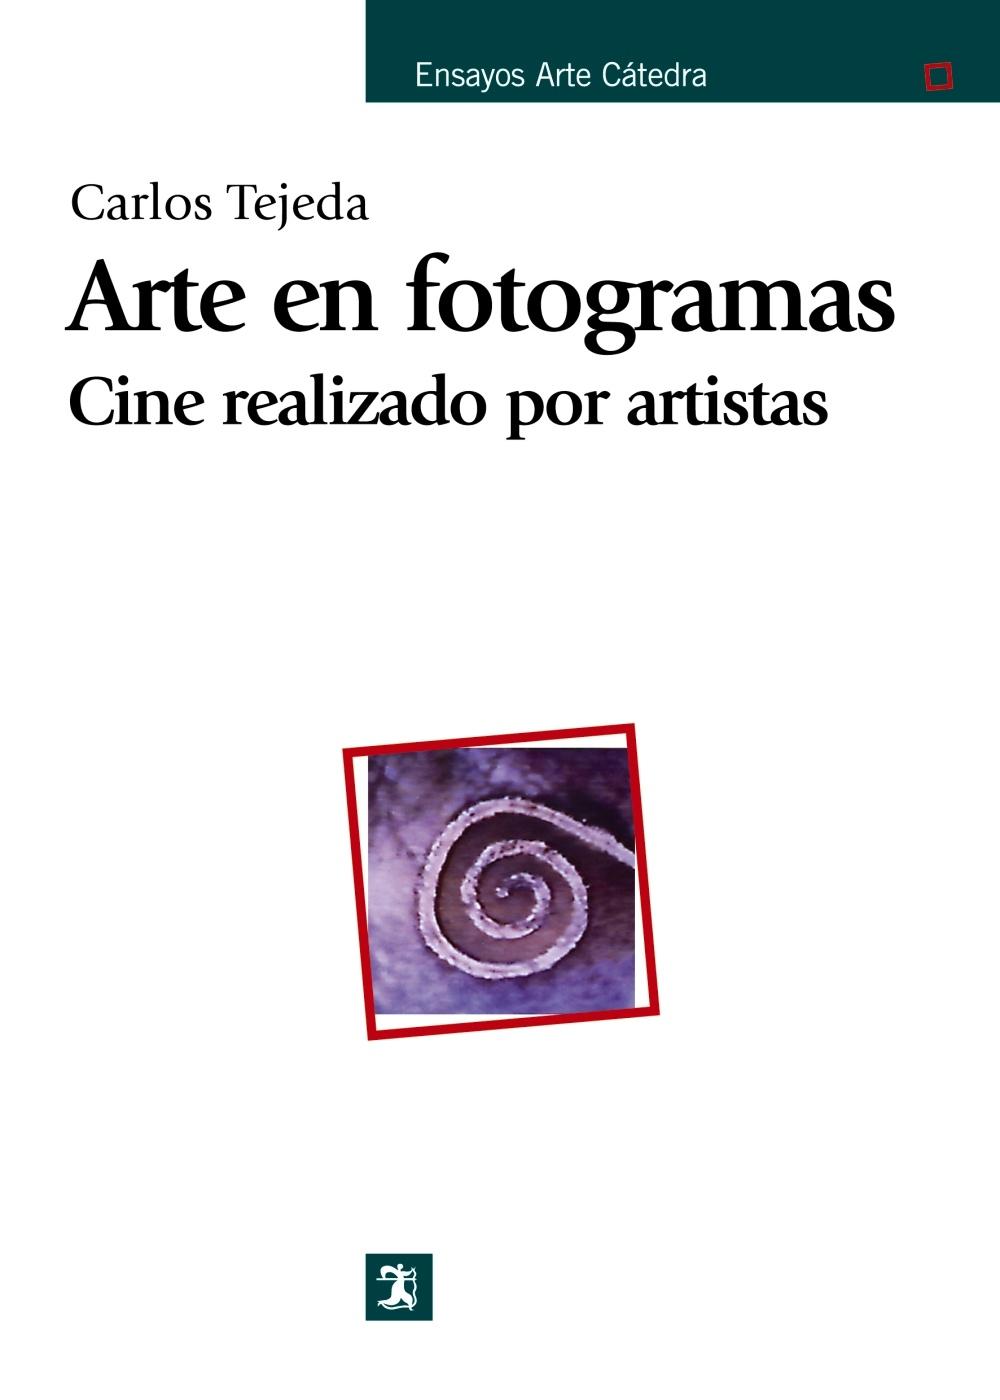 ARTE EN FOTOGRAMAS "CINE REALIZADO POR ARTISTAS"